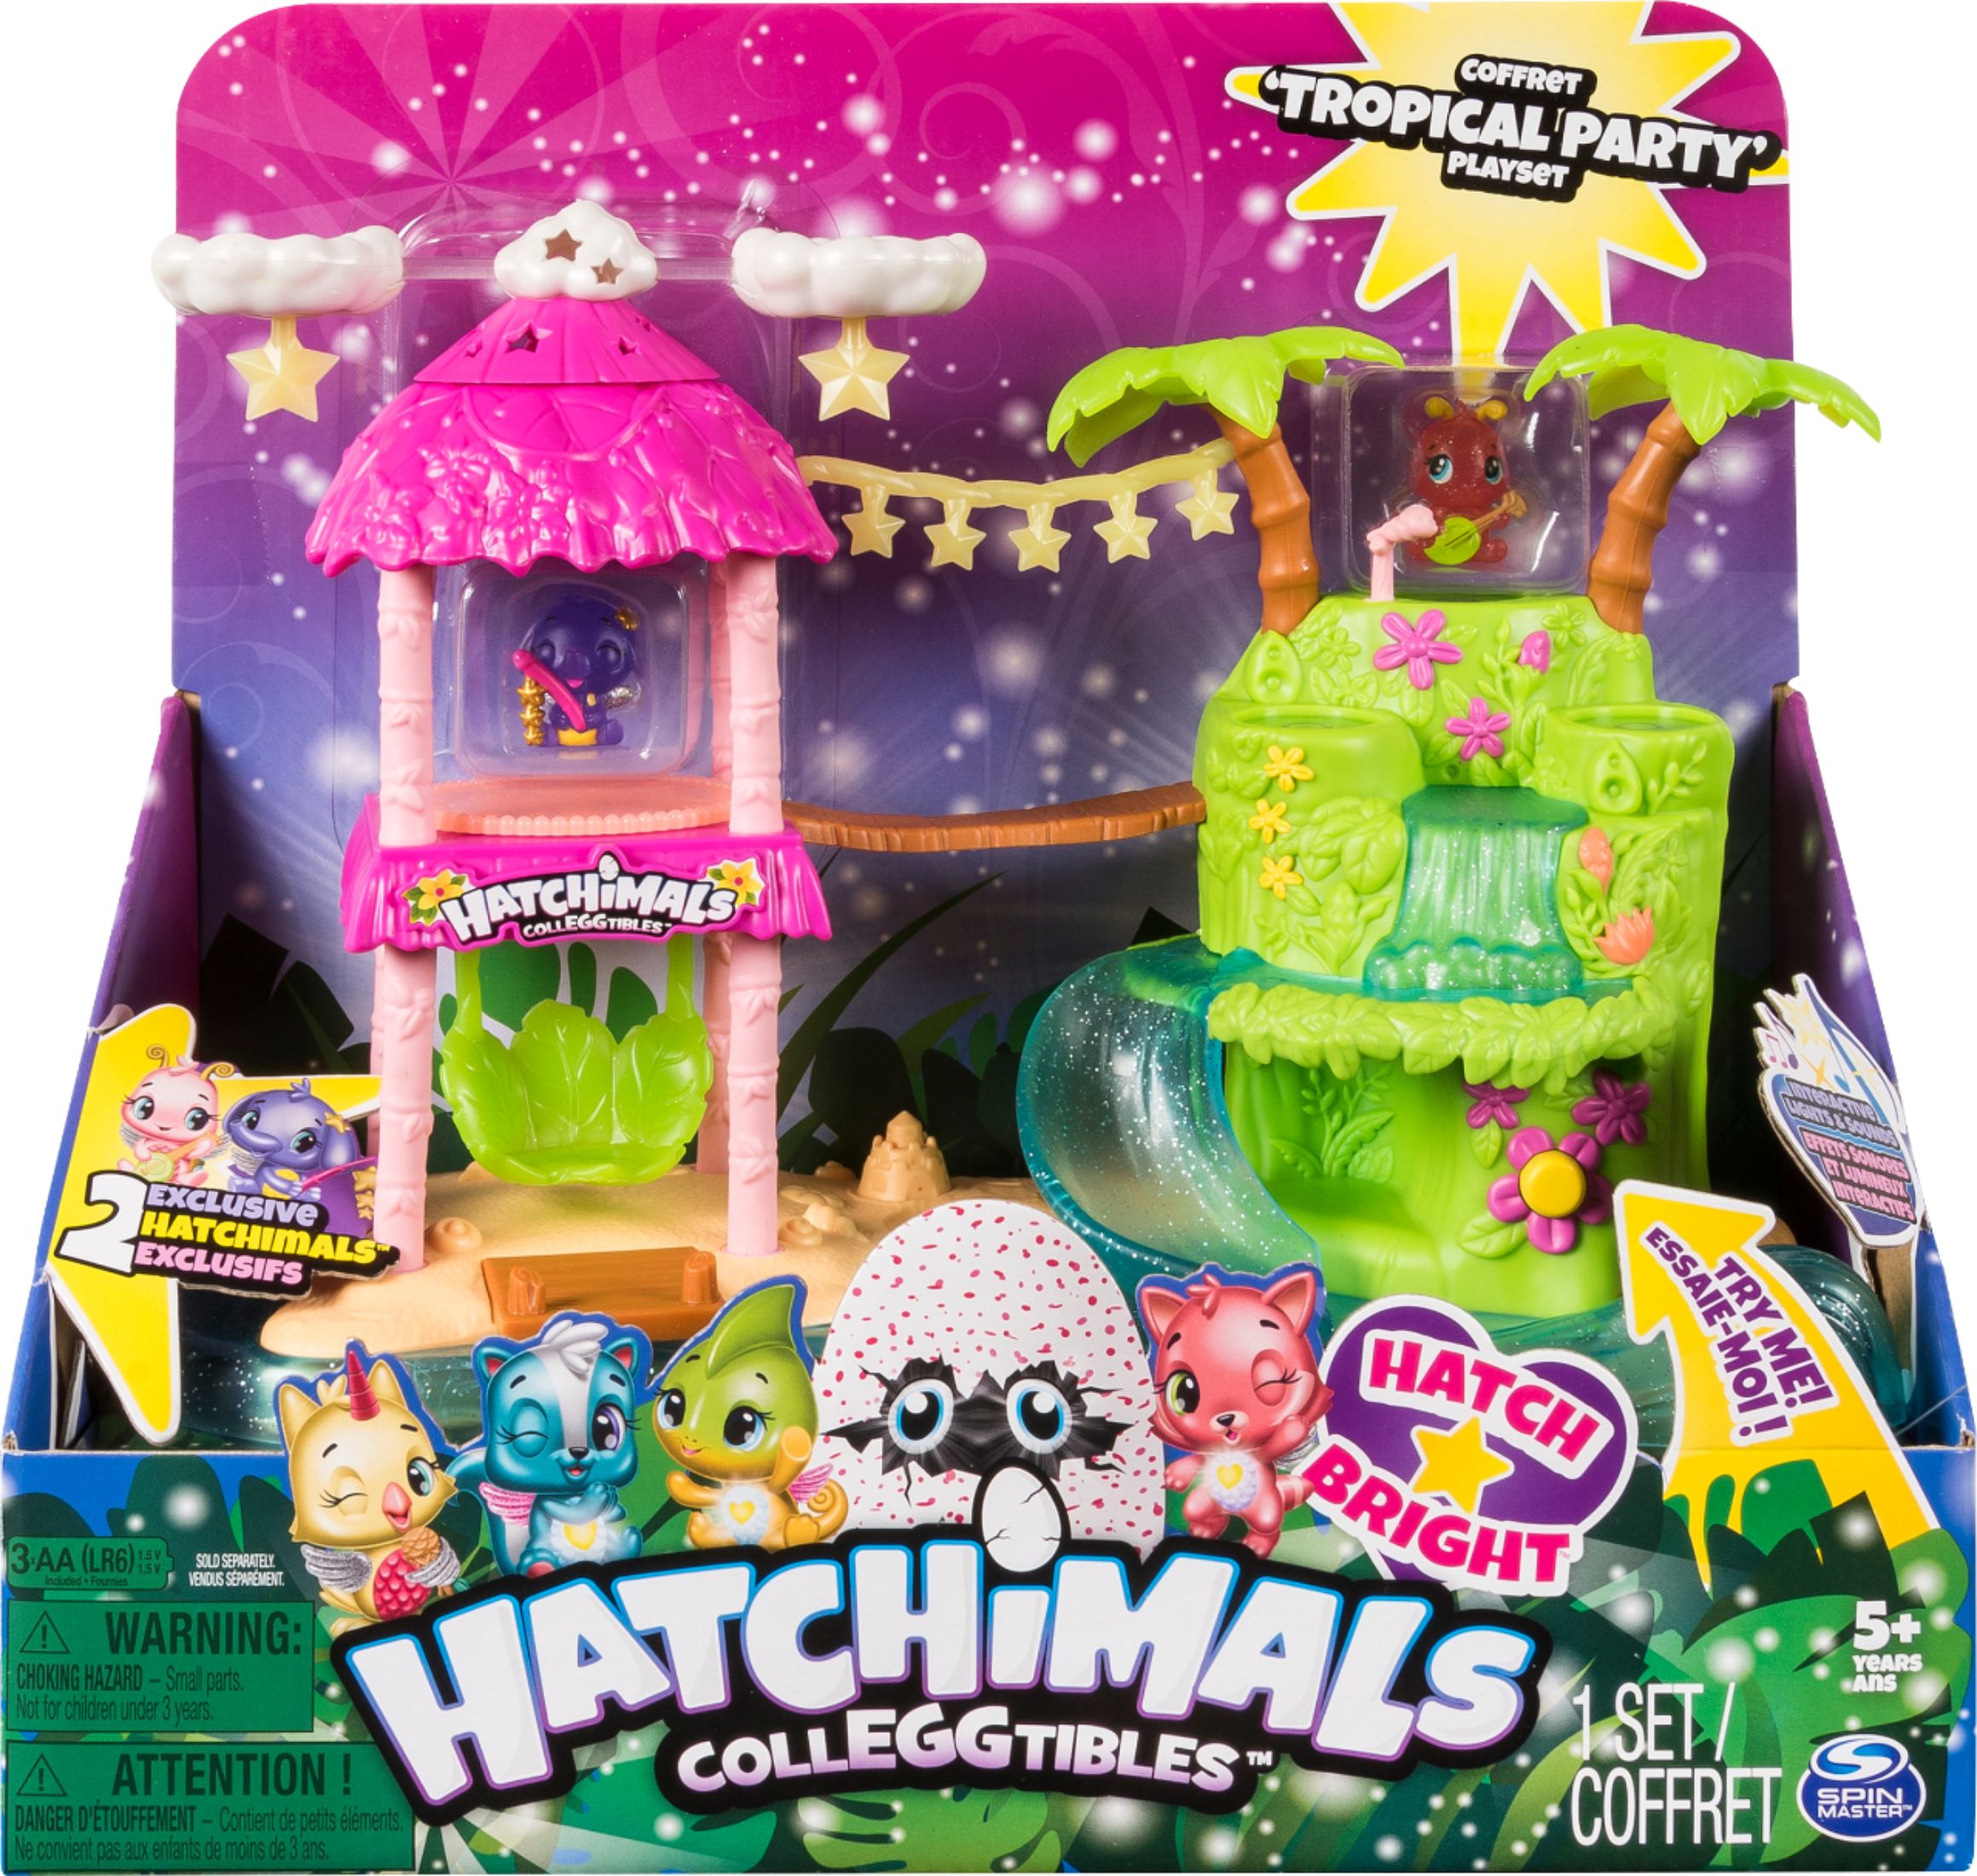 Hatchimals CollEGGtibles Season 4 Tropical Party Playset - Best Buy